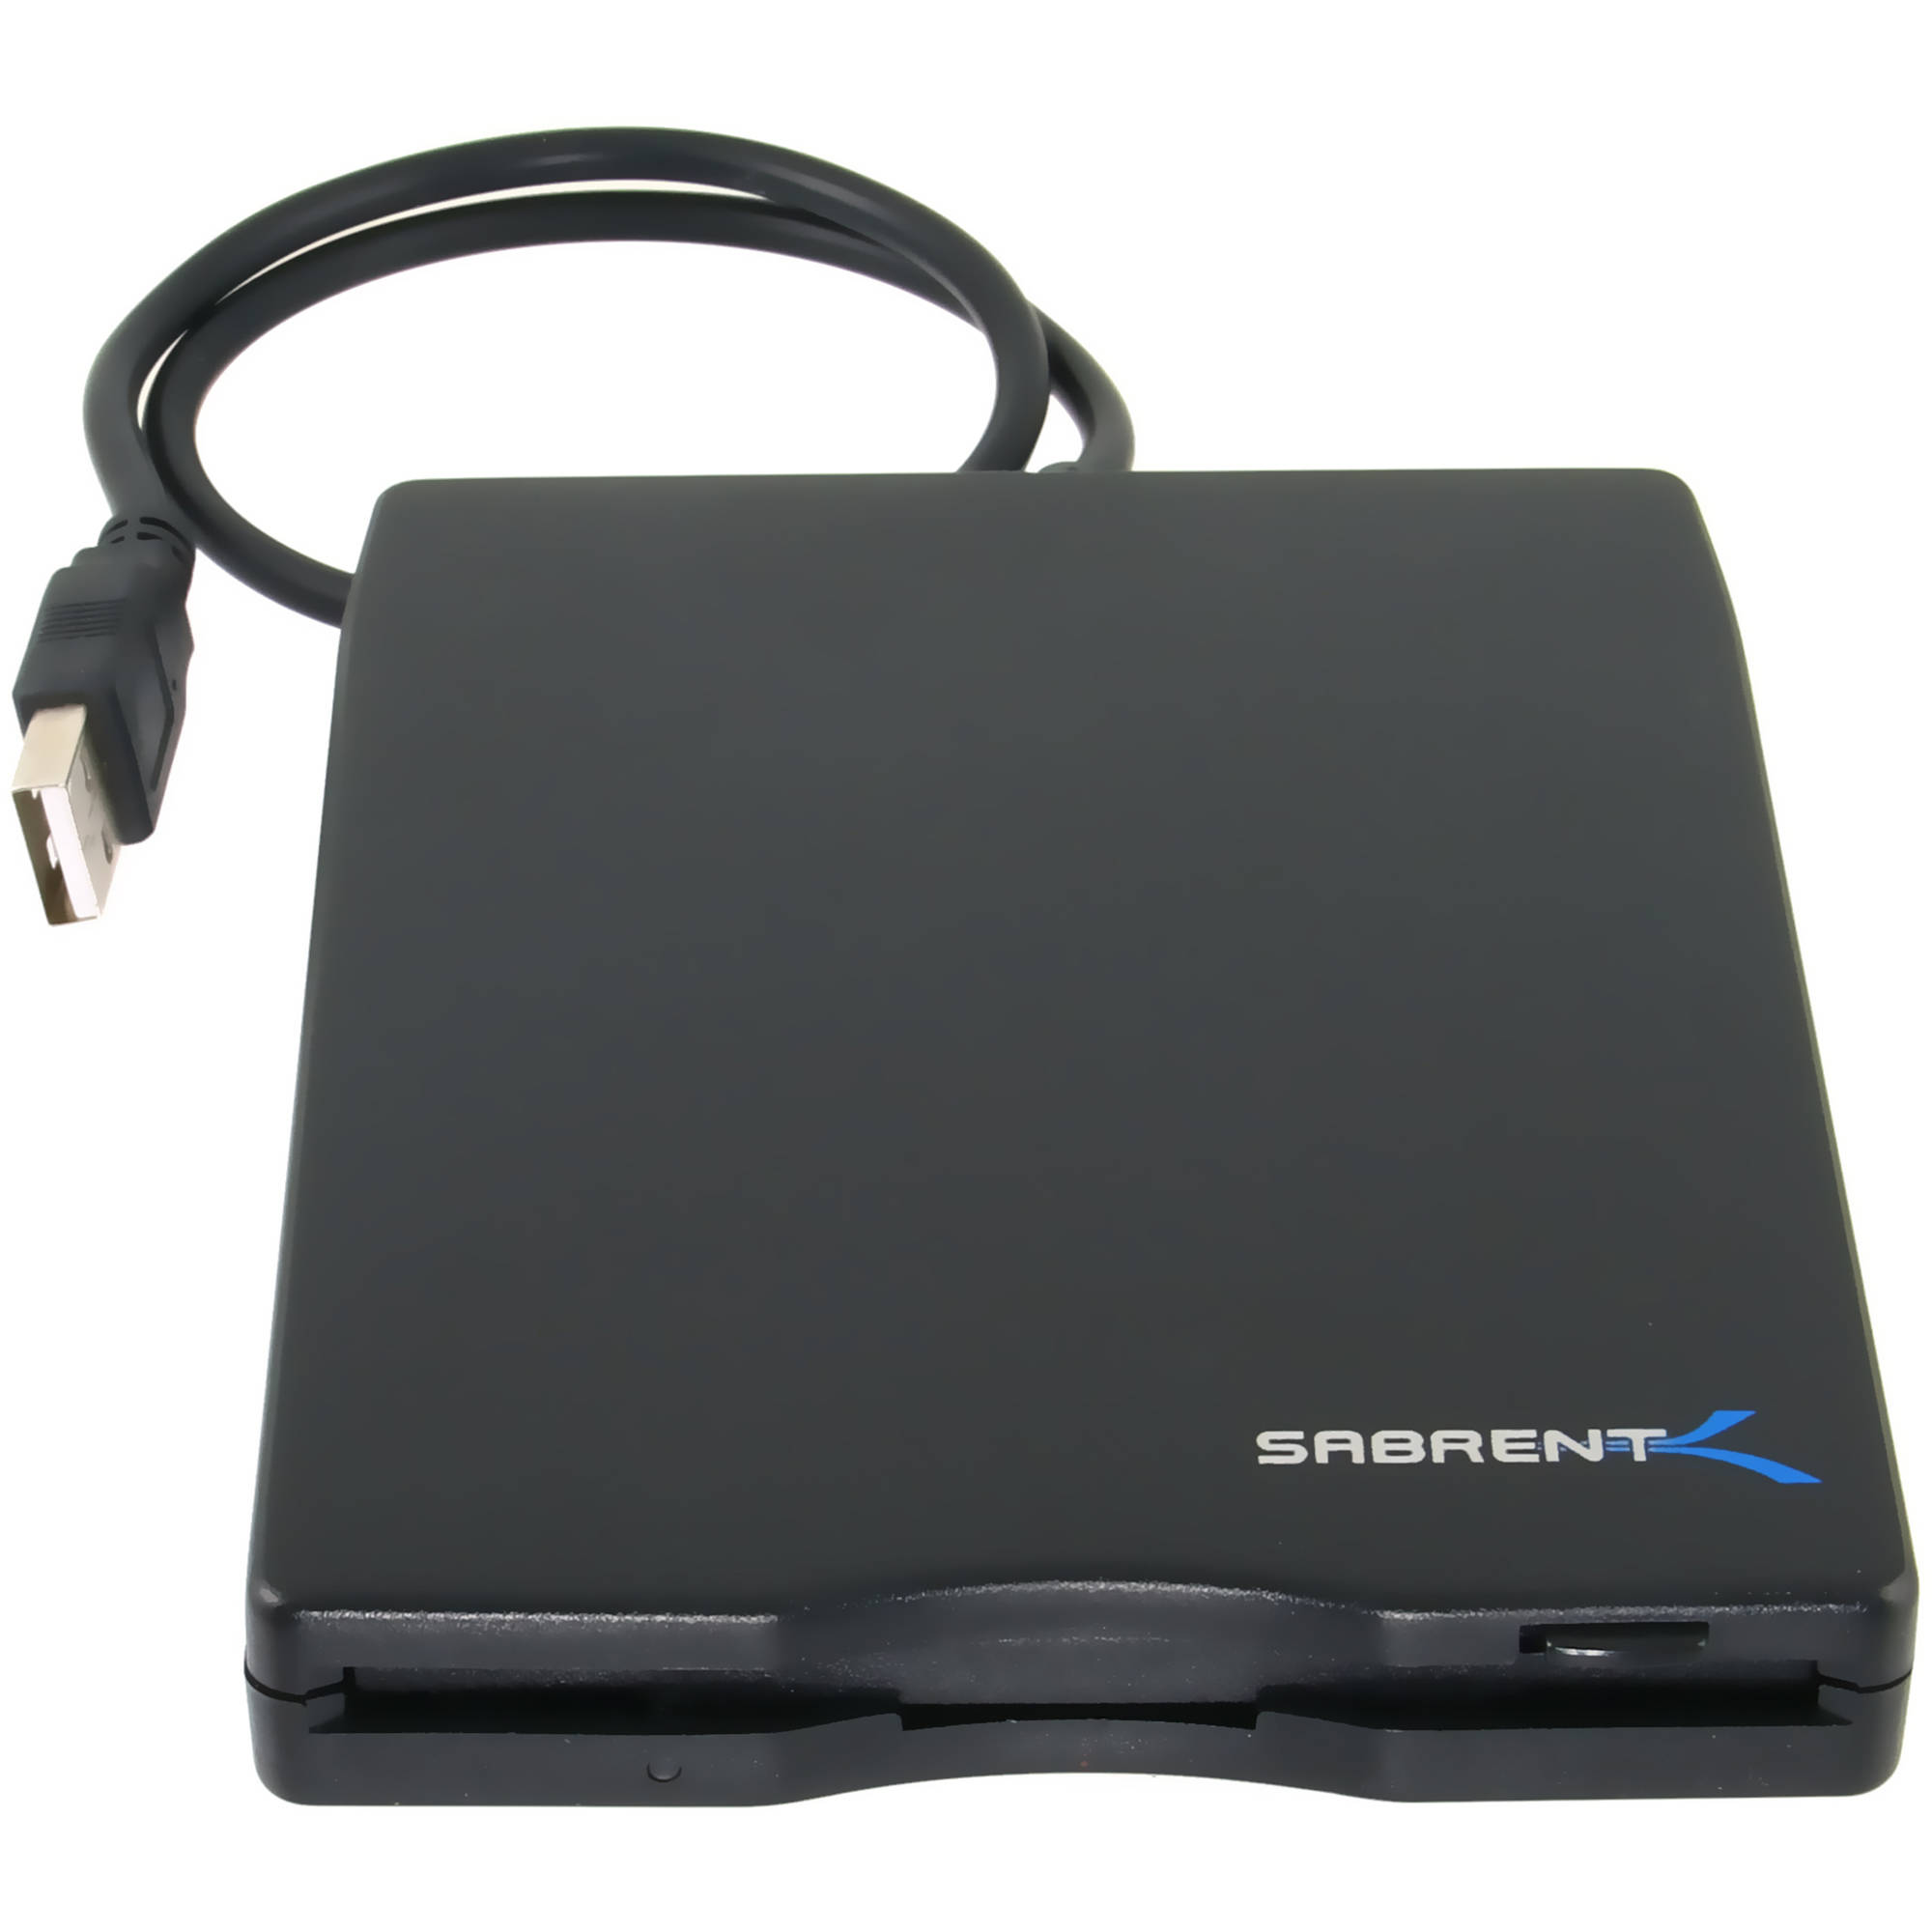 Sabrent USB 1.44MB FLOPPY DRIVE PORTABLE BLACK - image 5 of 5